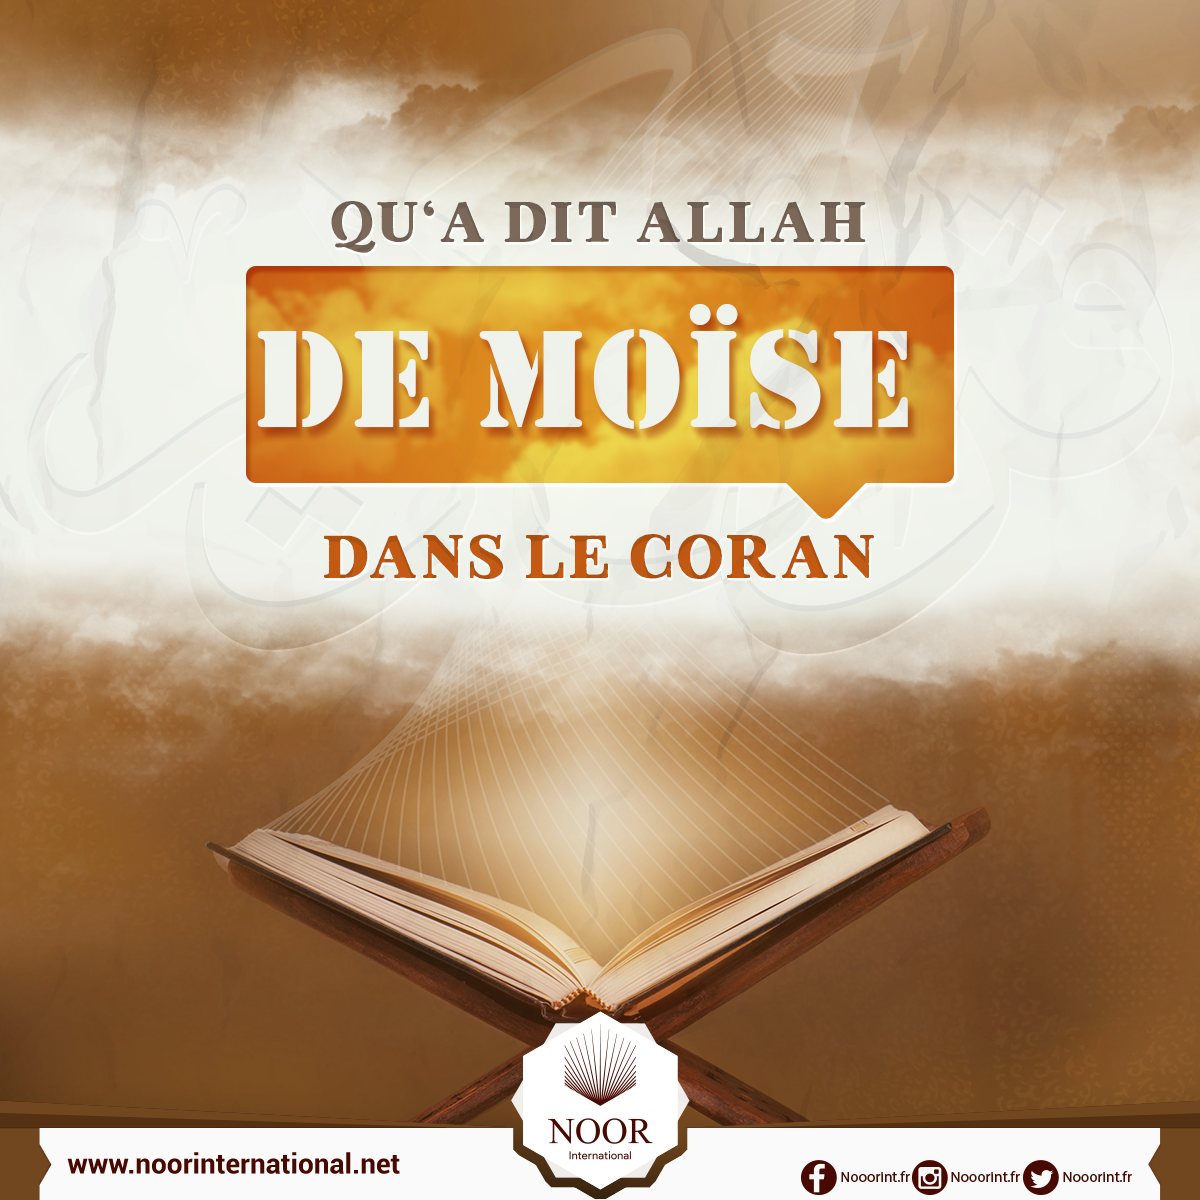 Qu'a dit Allah de Moïse dans le Coran ?